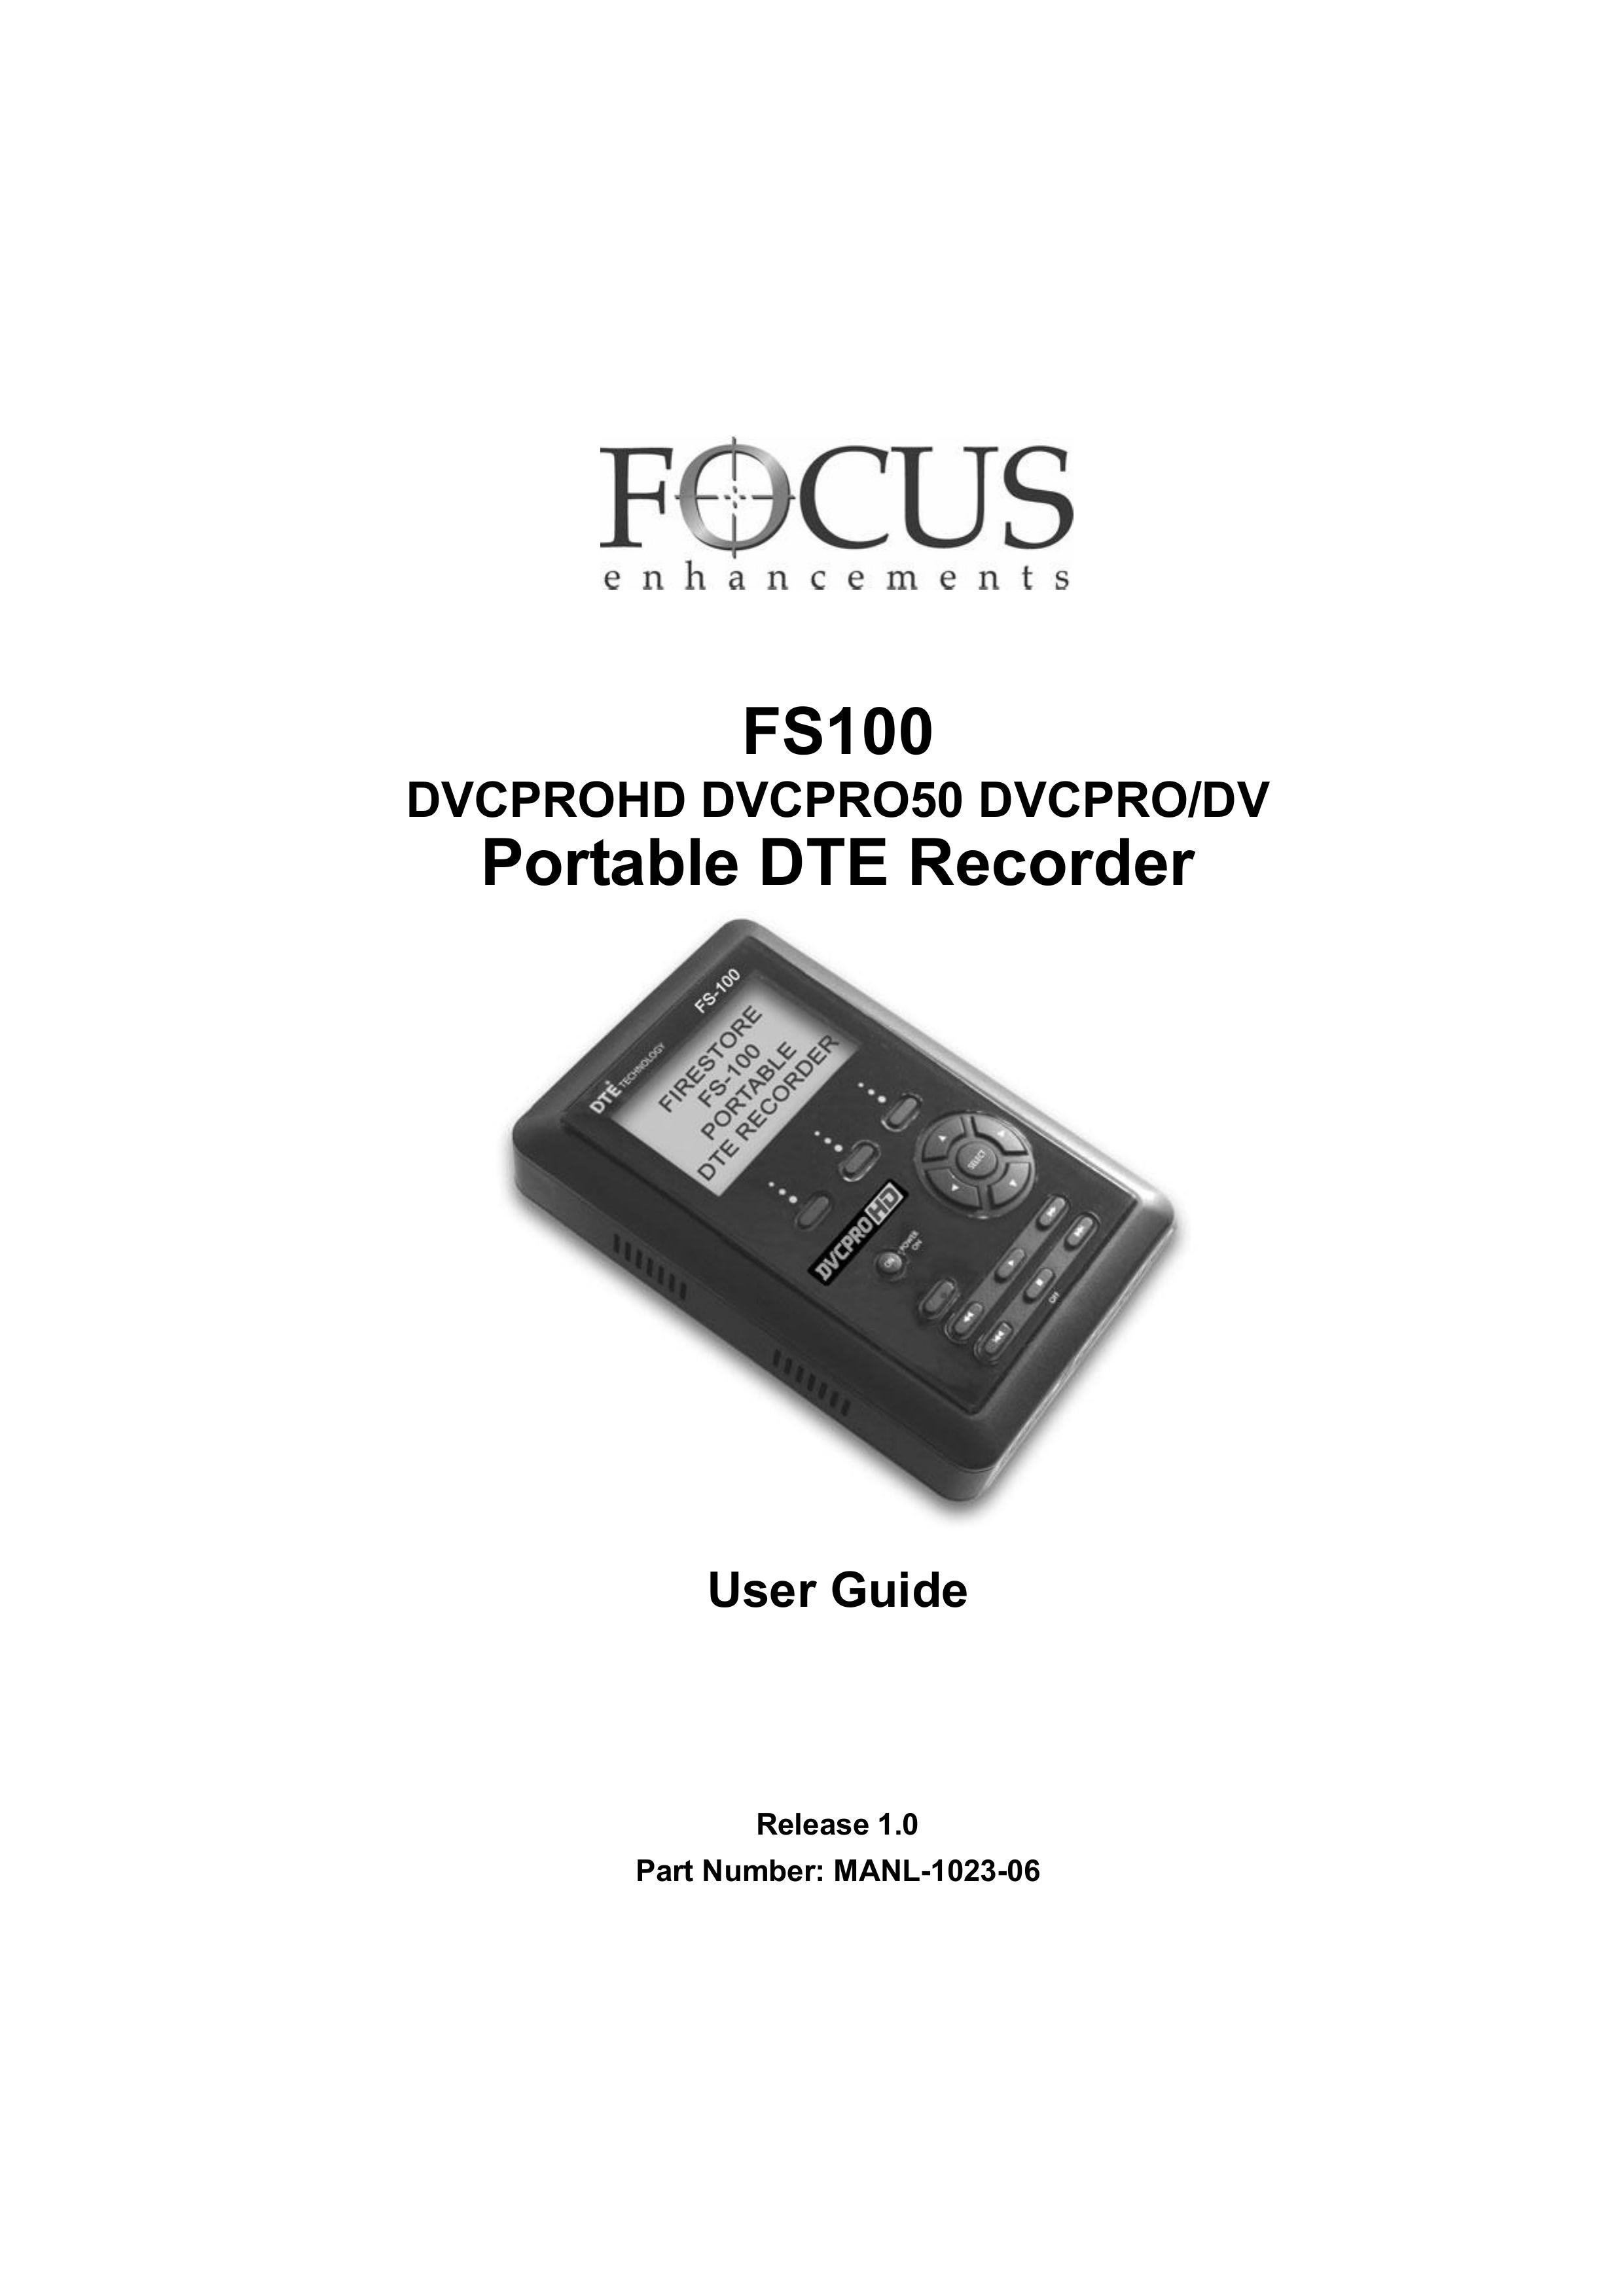 FOCUS Enhancements FS100 Recording Equipment User Manual (Page 1)